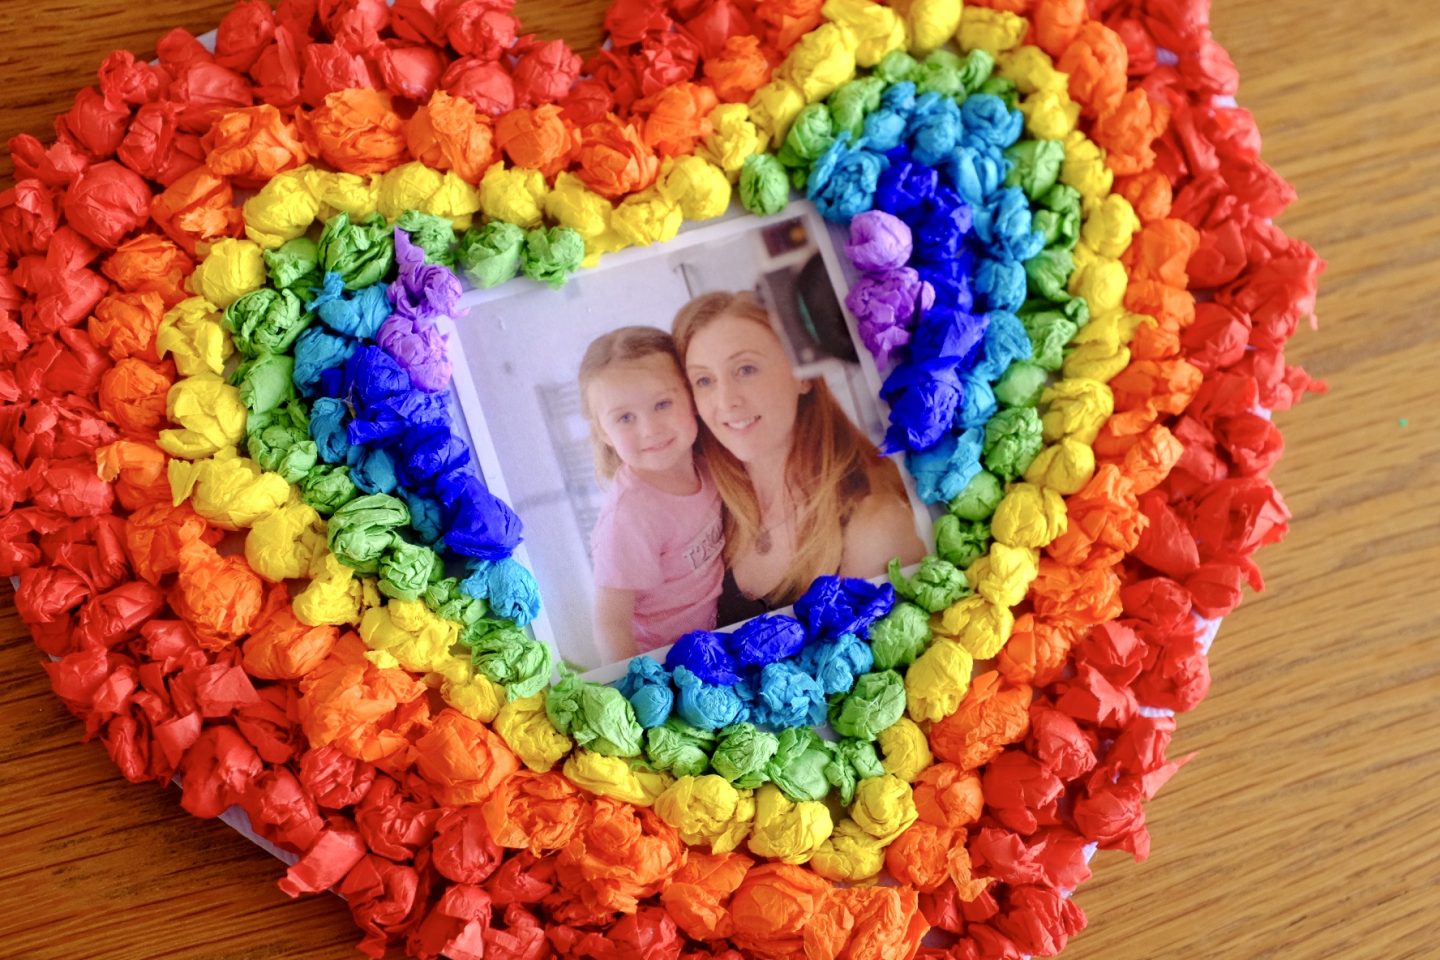 Rainbow Heart Tissue Paper Craft Kit- Makes 12